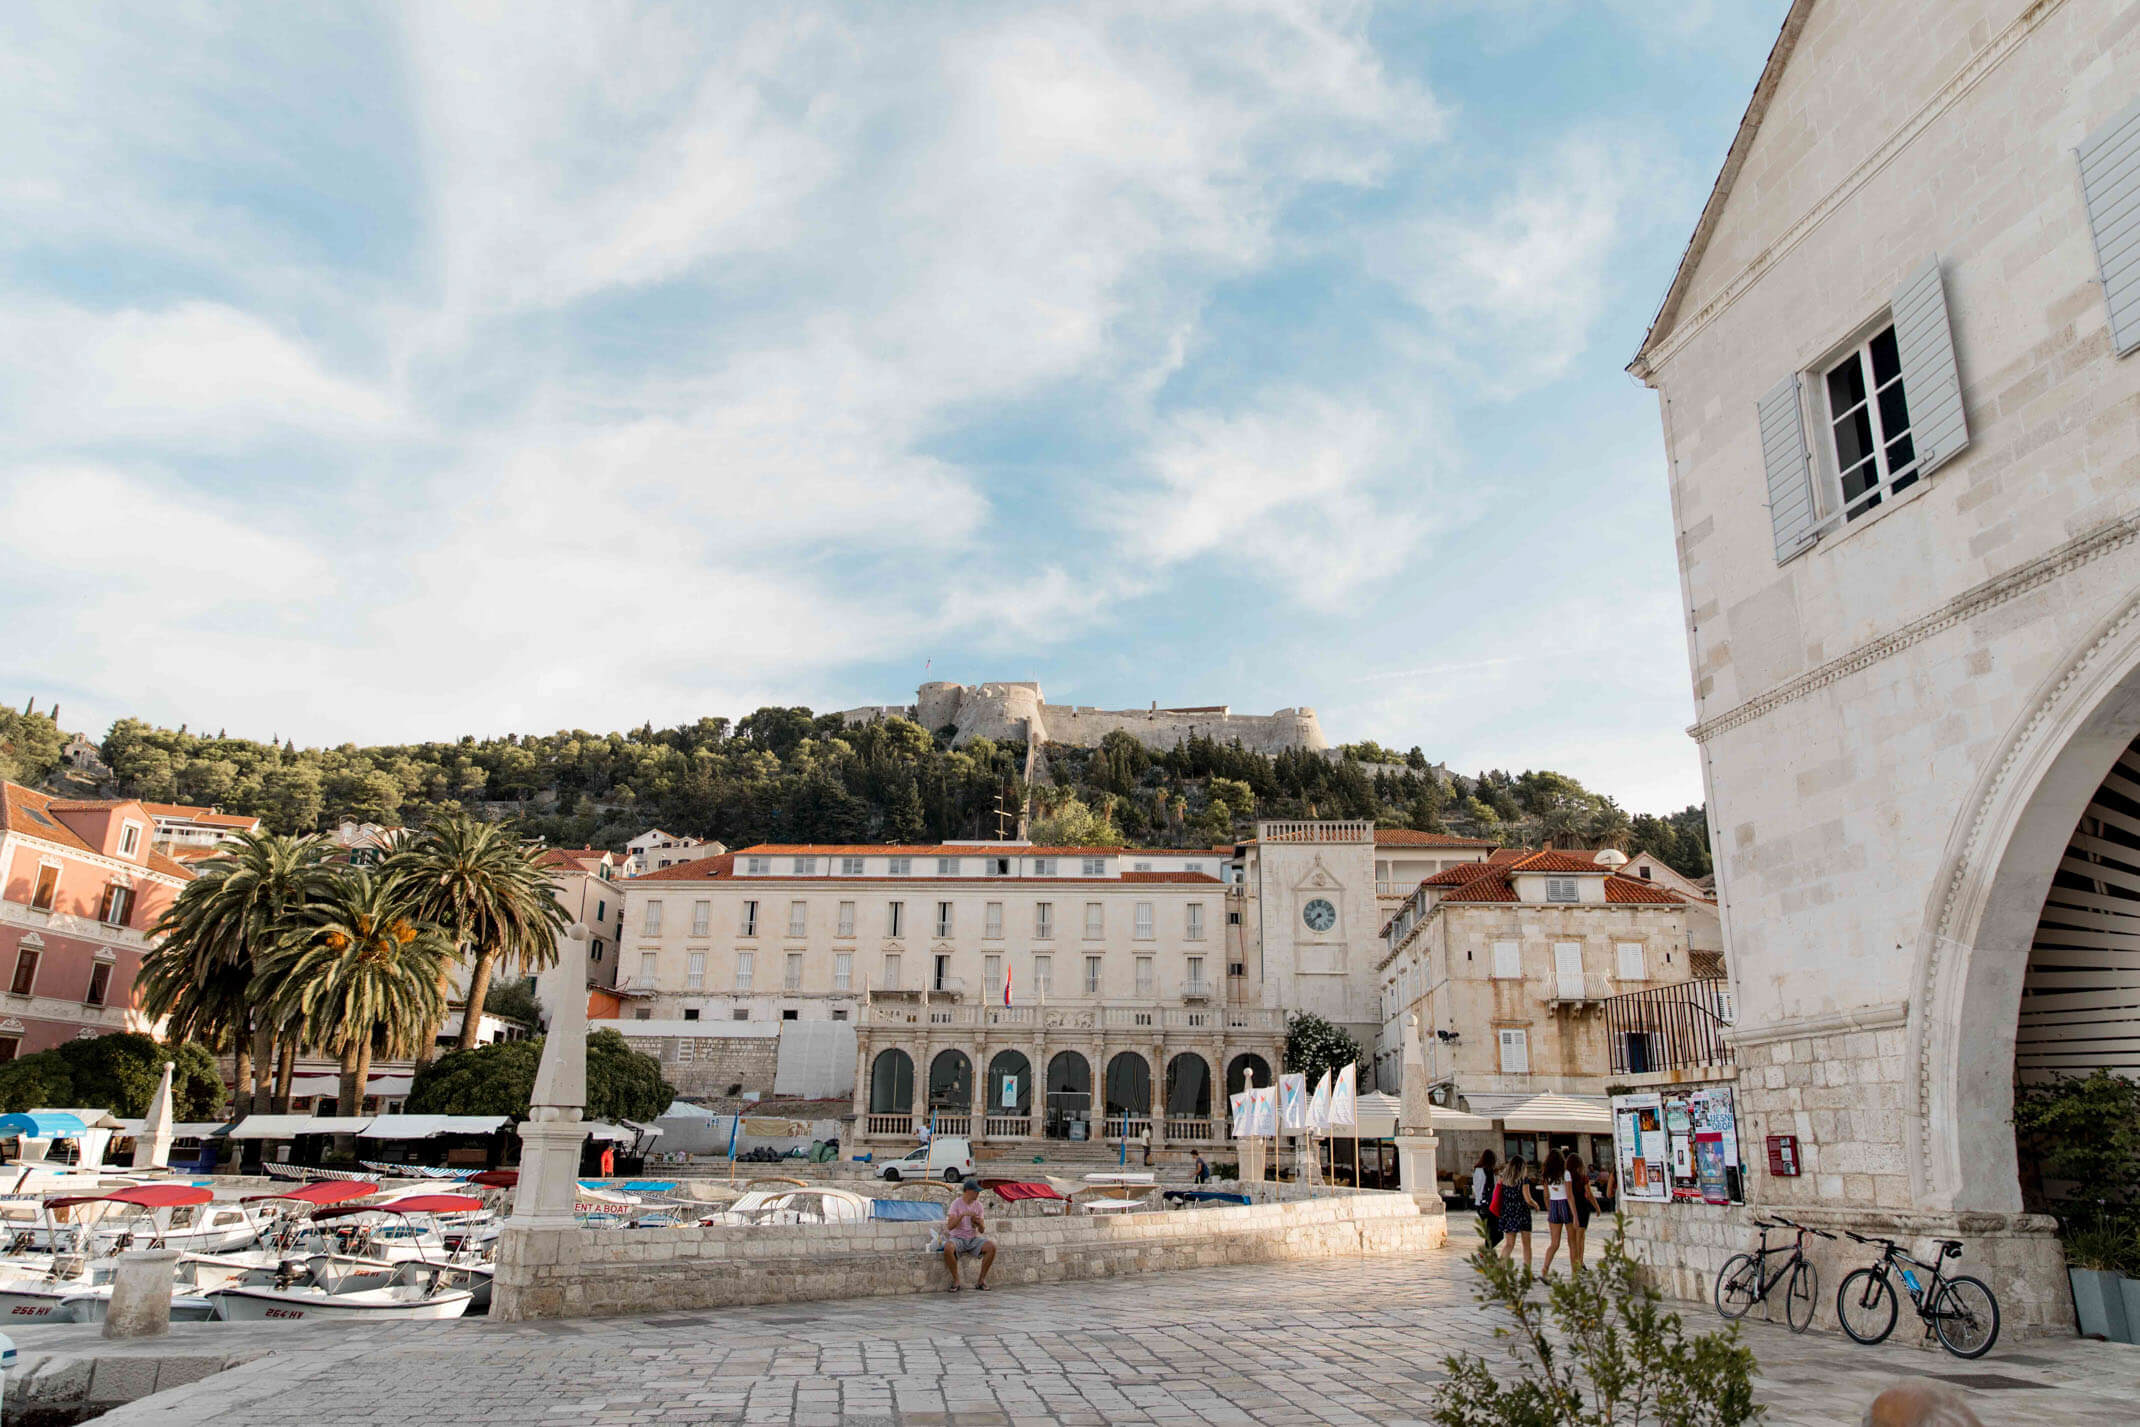 WMGT Croatia: Split, Hvar and Dubrovnik